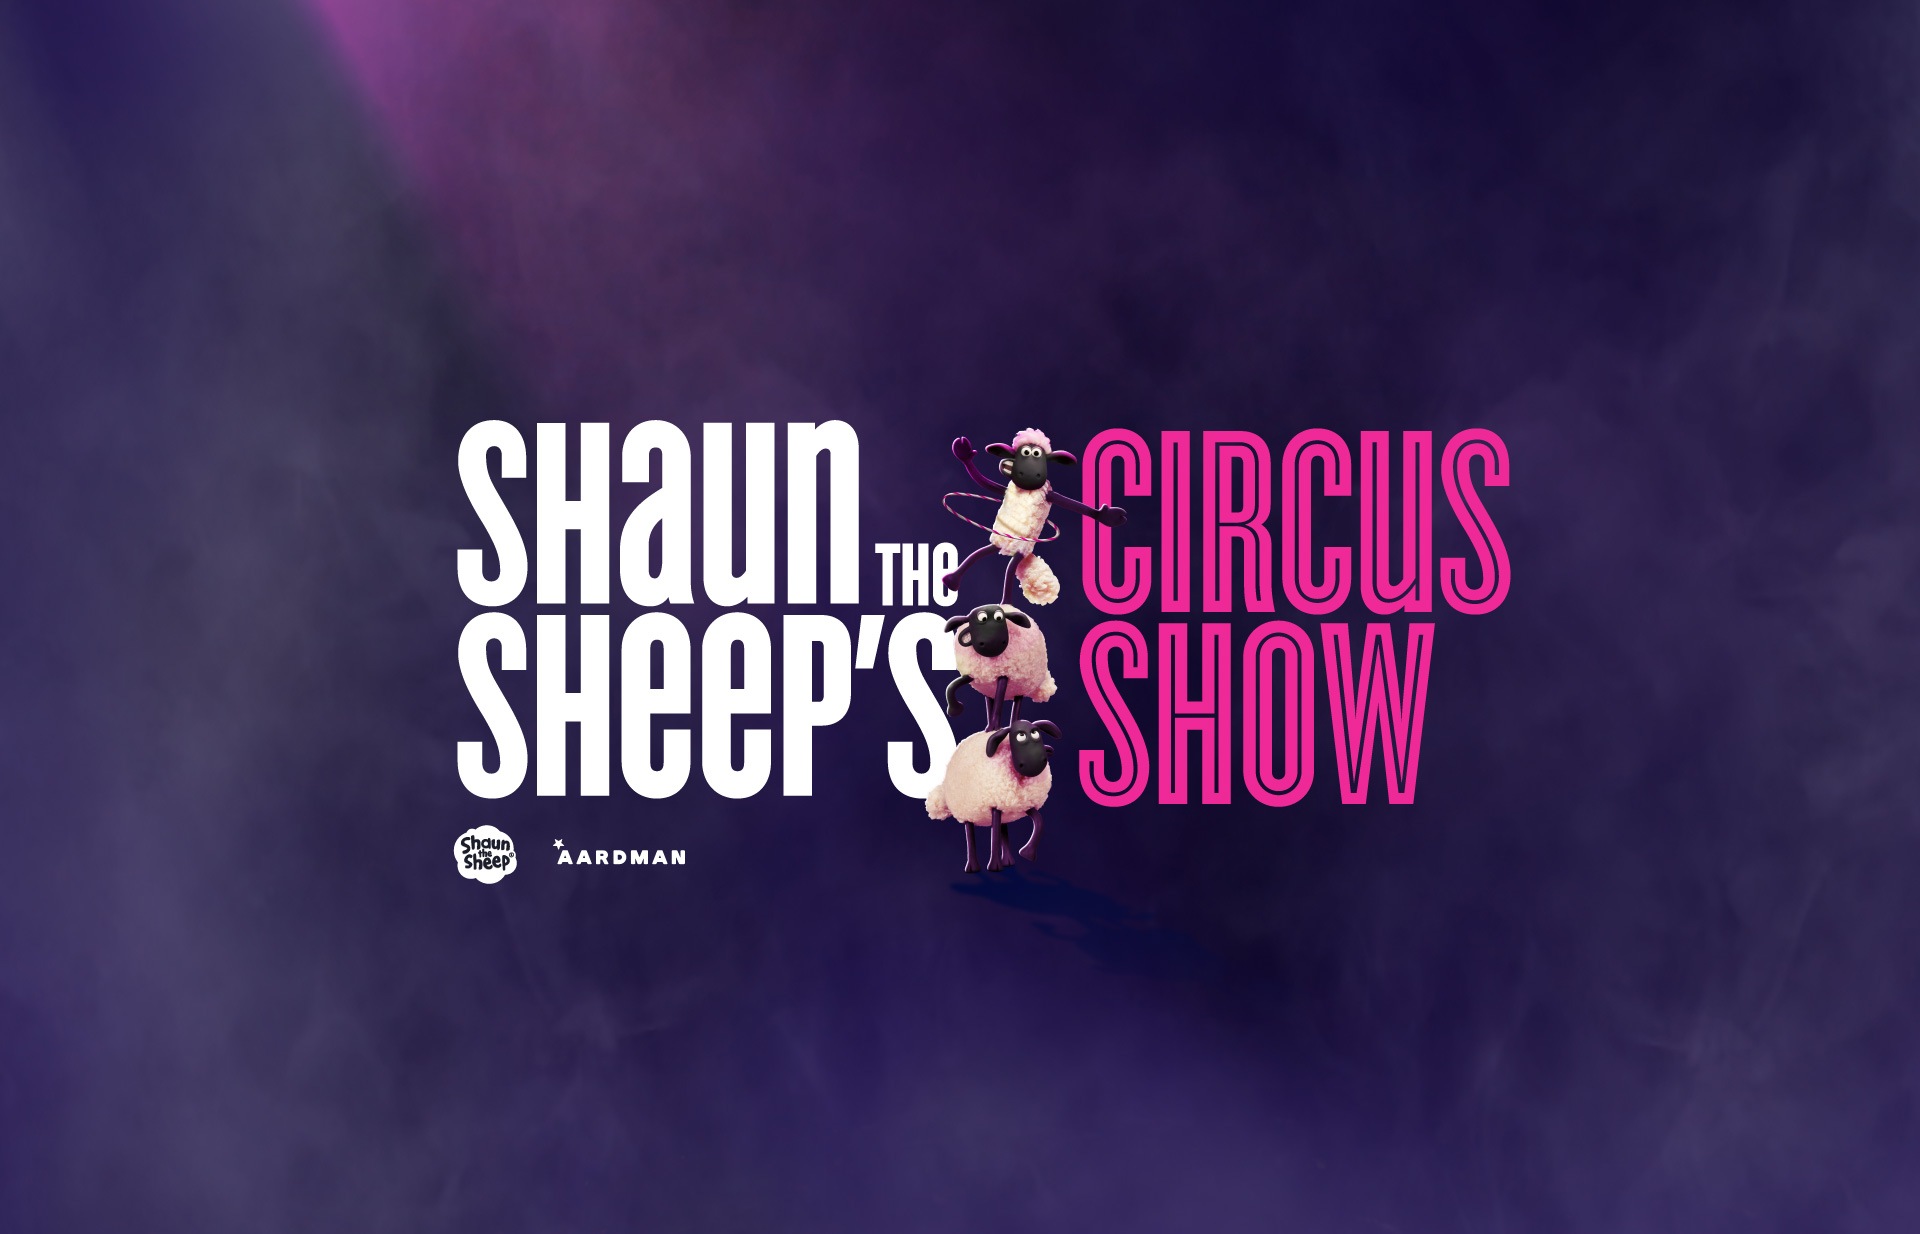 Shaun the Sheep’s Circus Show(못말리는 어린 양 숀 서커스 쇼)